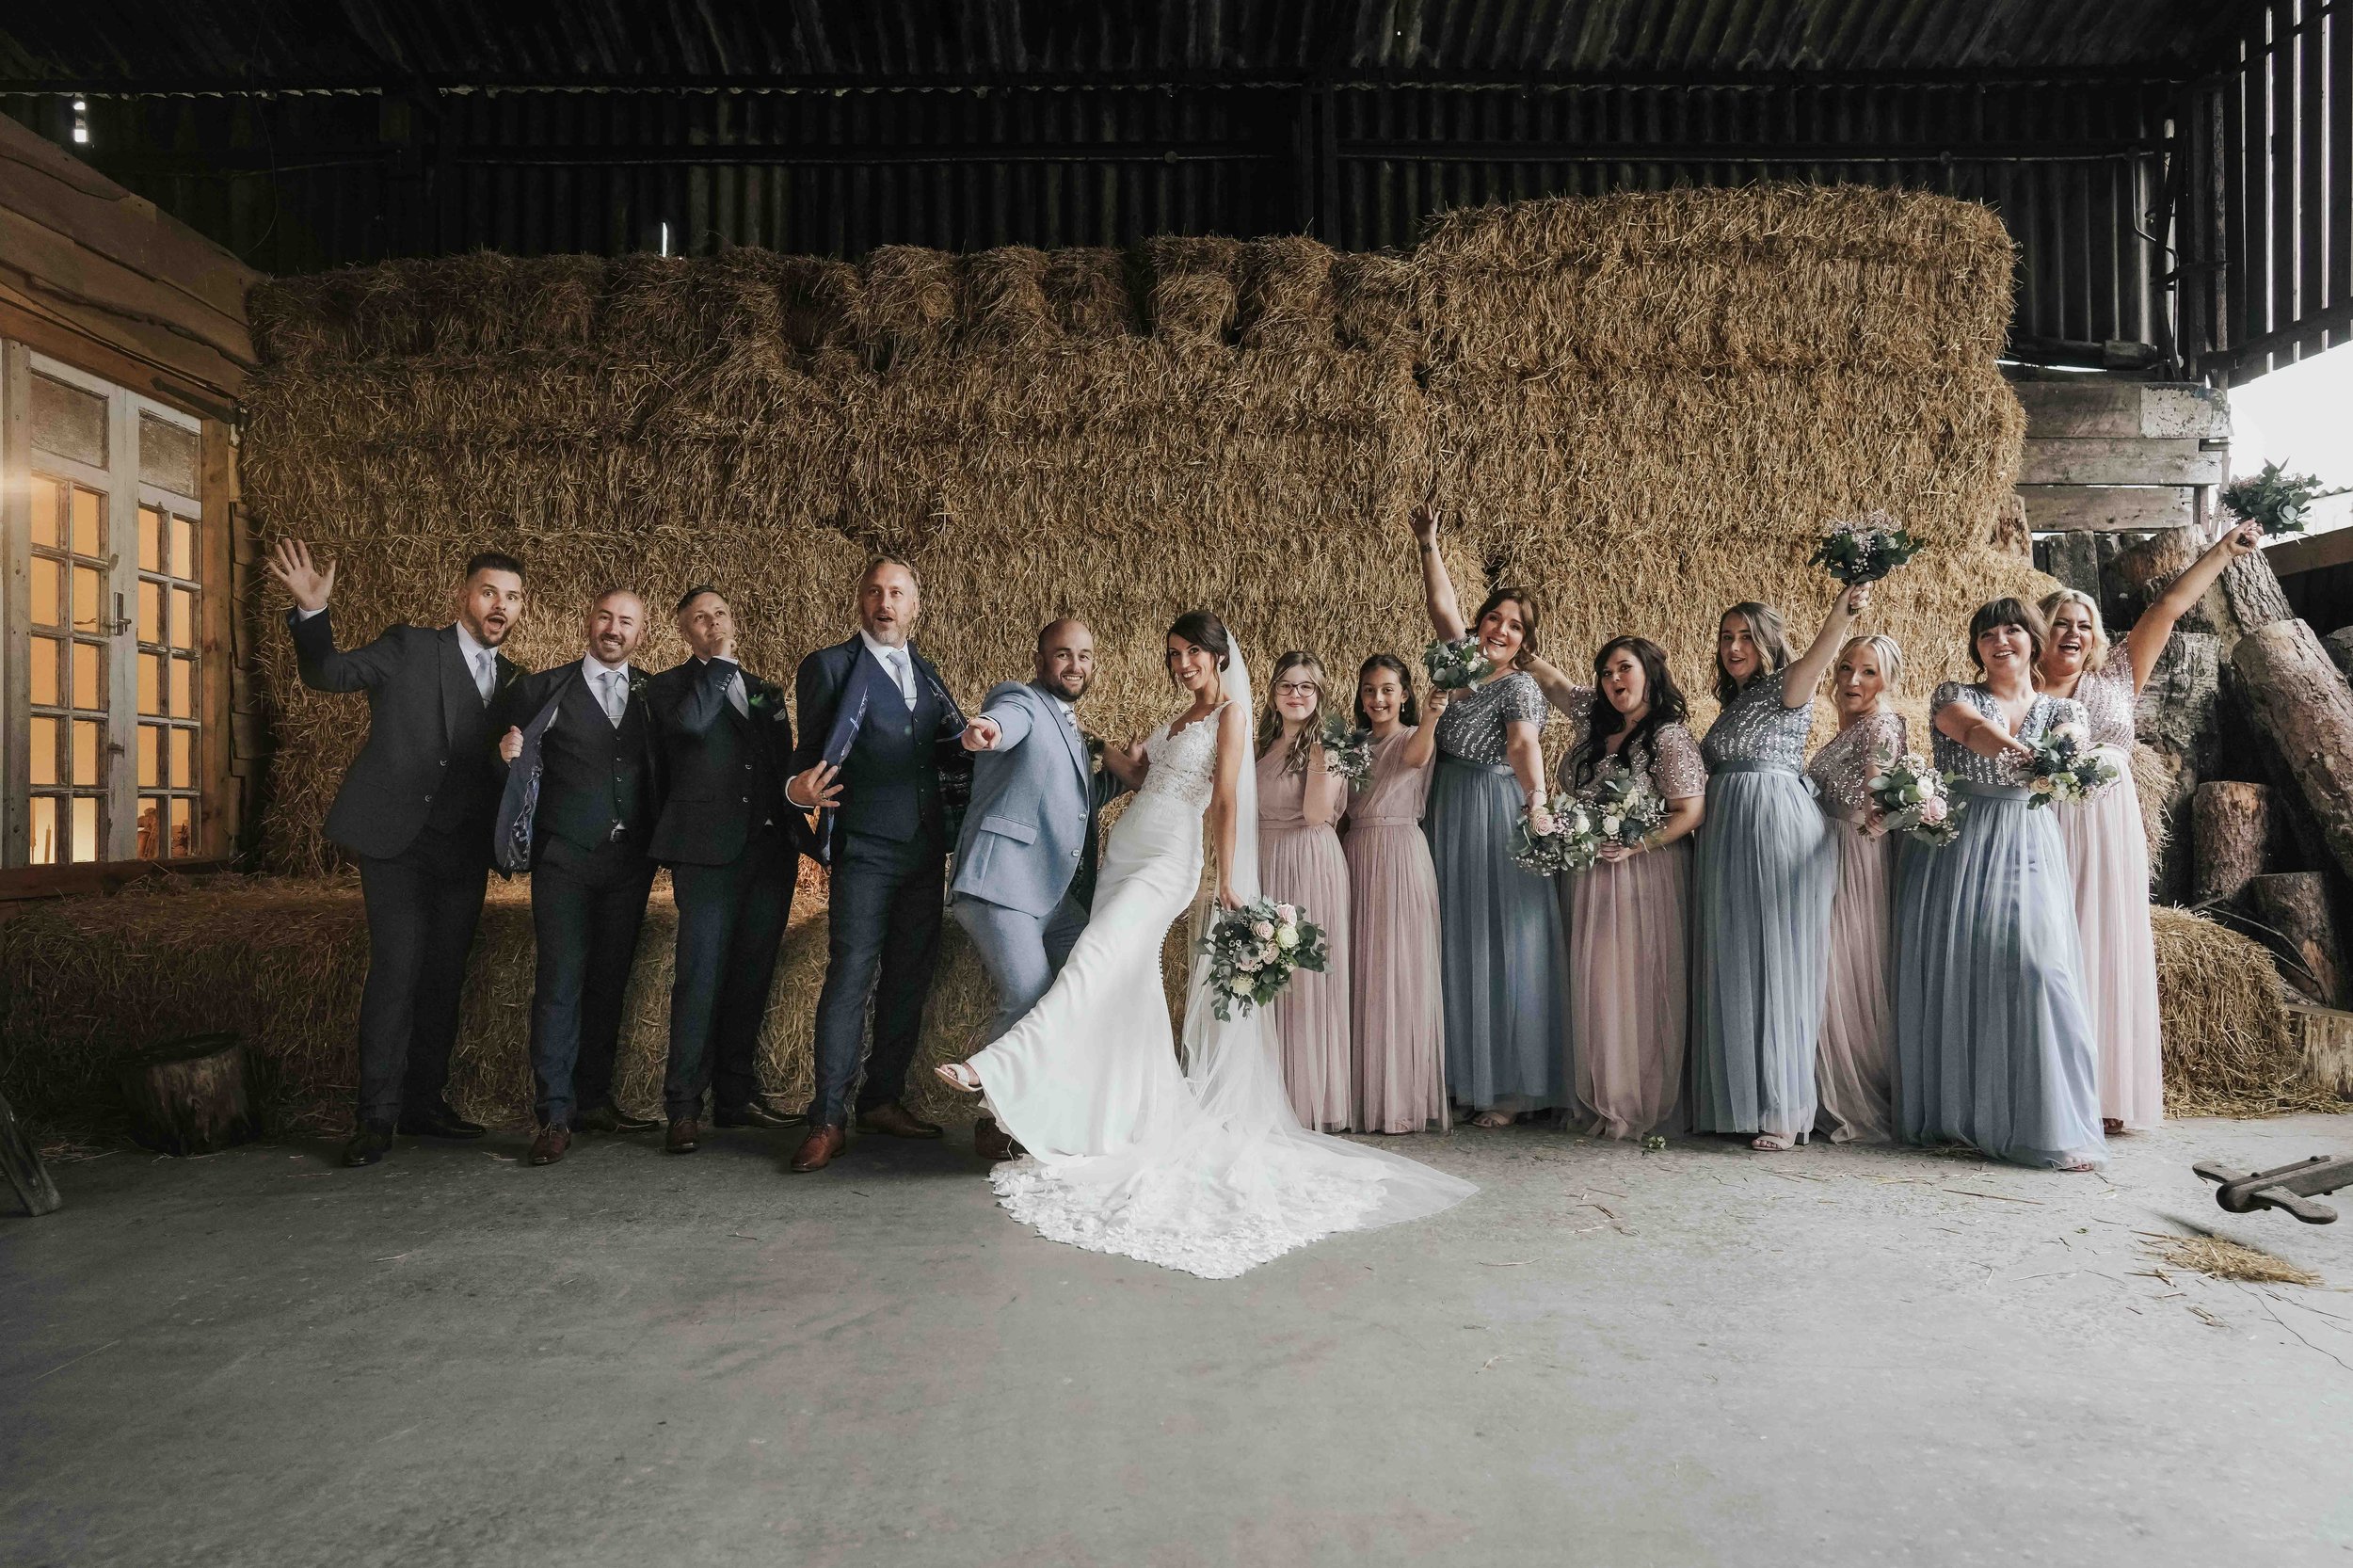 owen house wedding barn Photography cheshire Photographer- 031.jpg